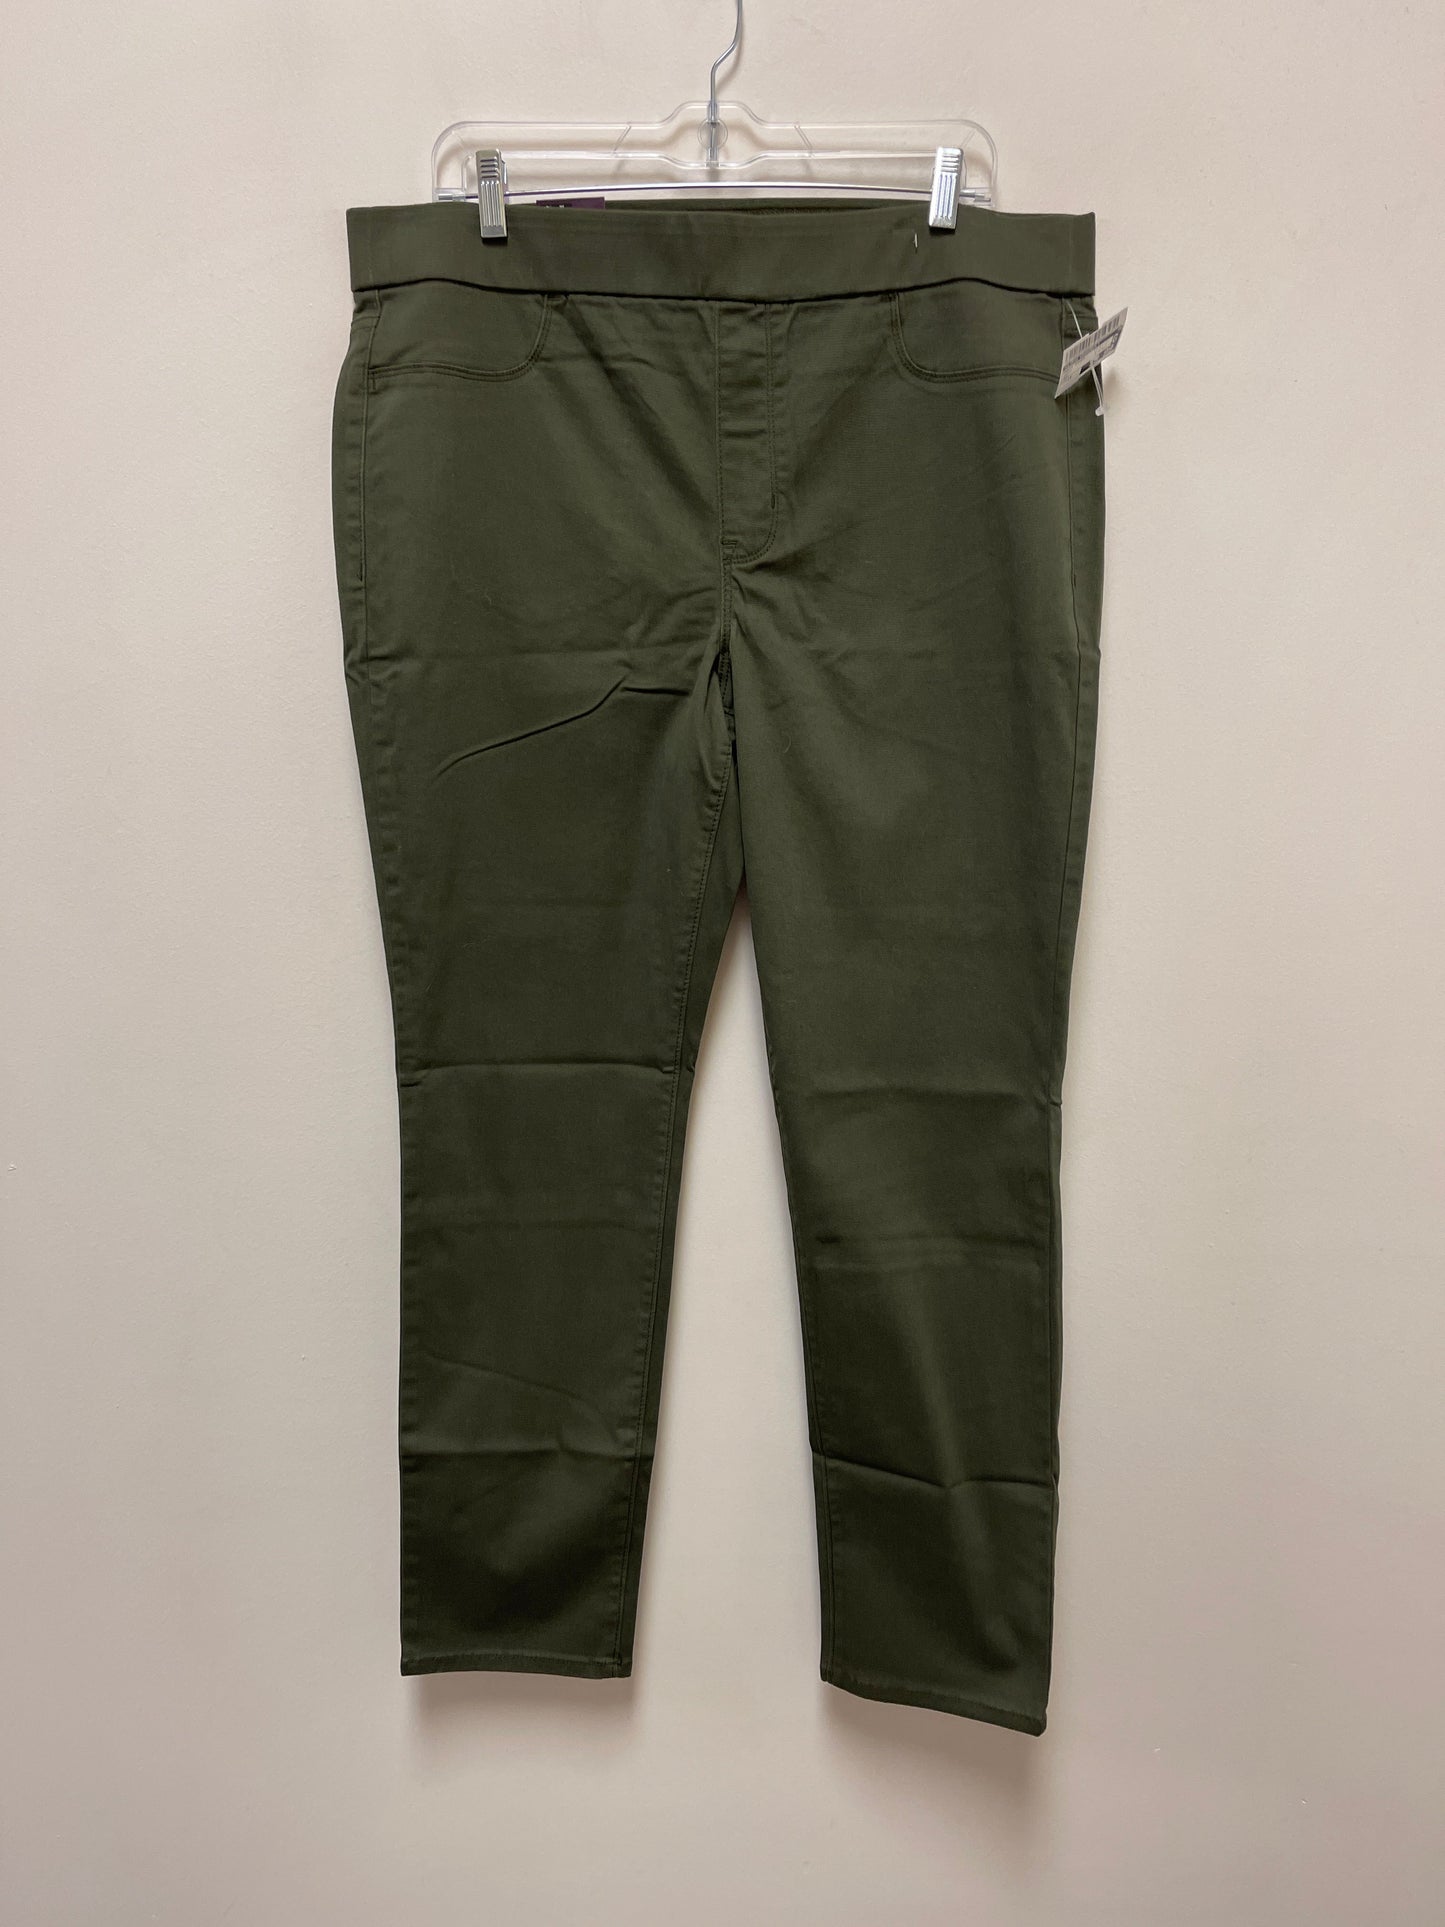 Green Pants Other Gloria Vanderbilt, Size 14